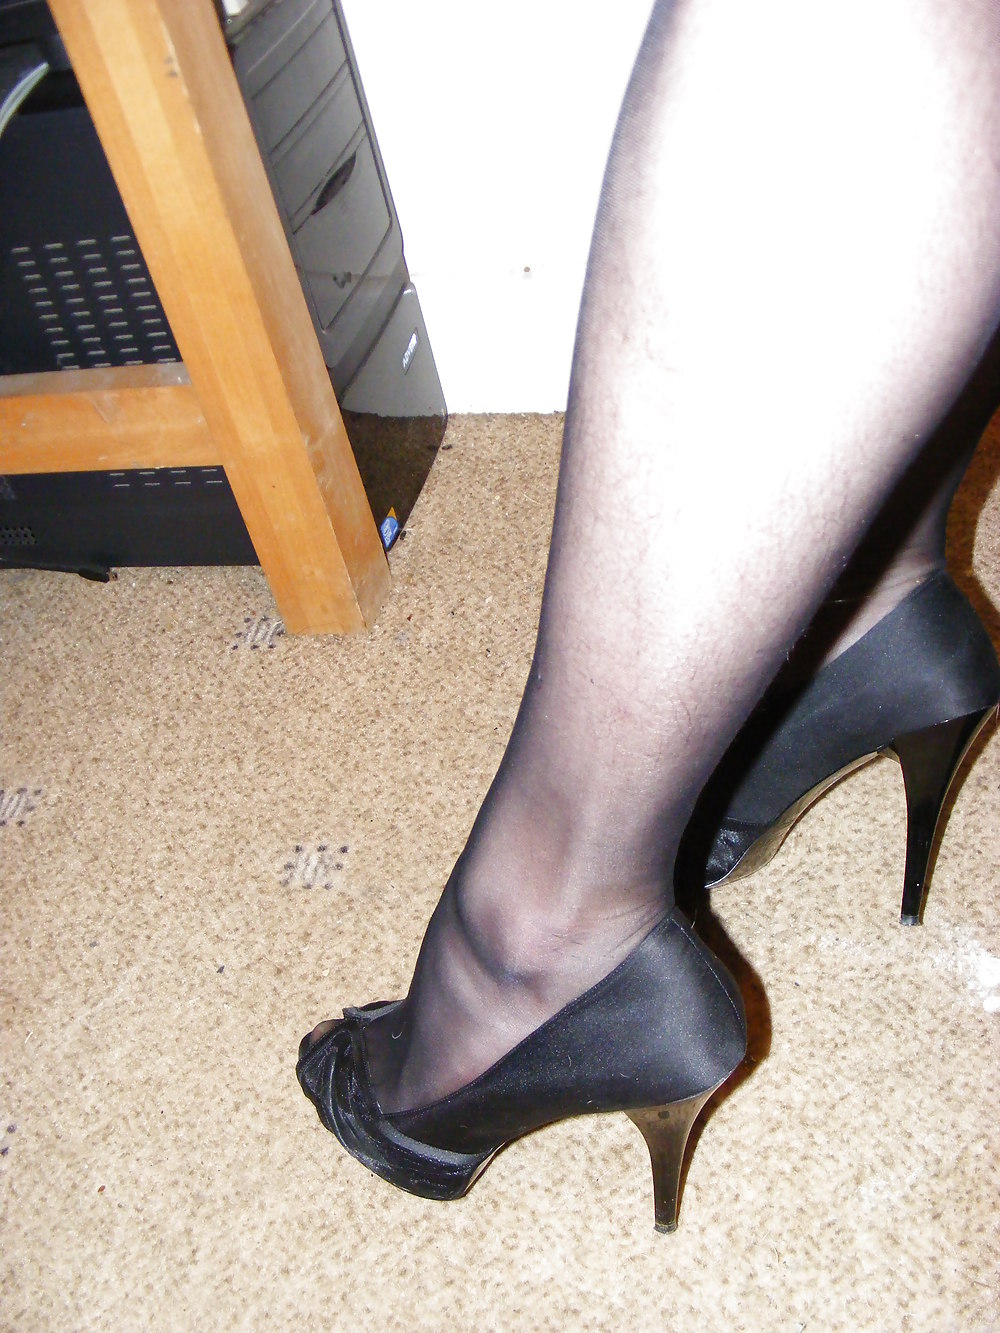 More High heels, a big cock and a dildo again! #5231178